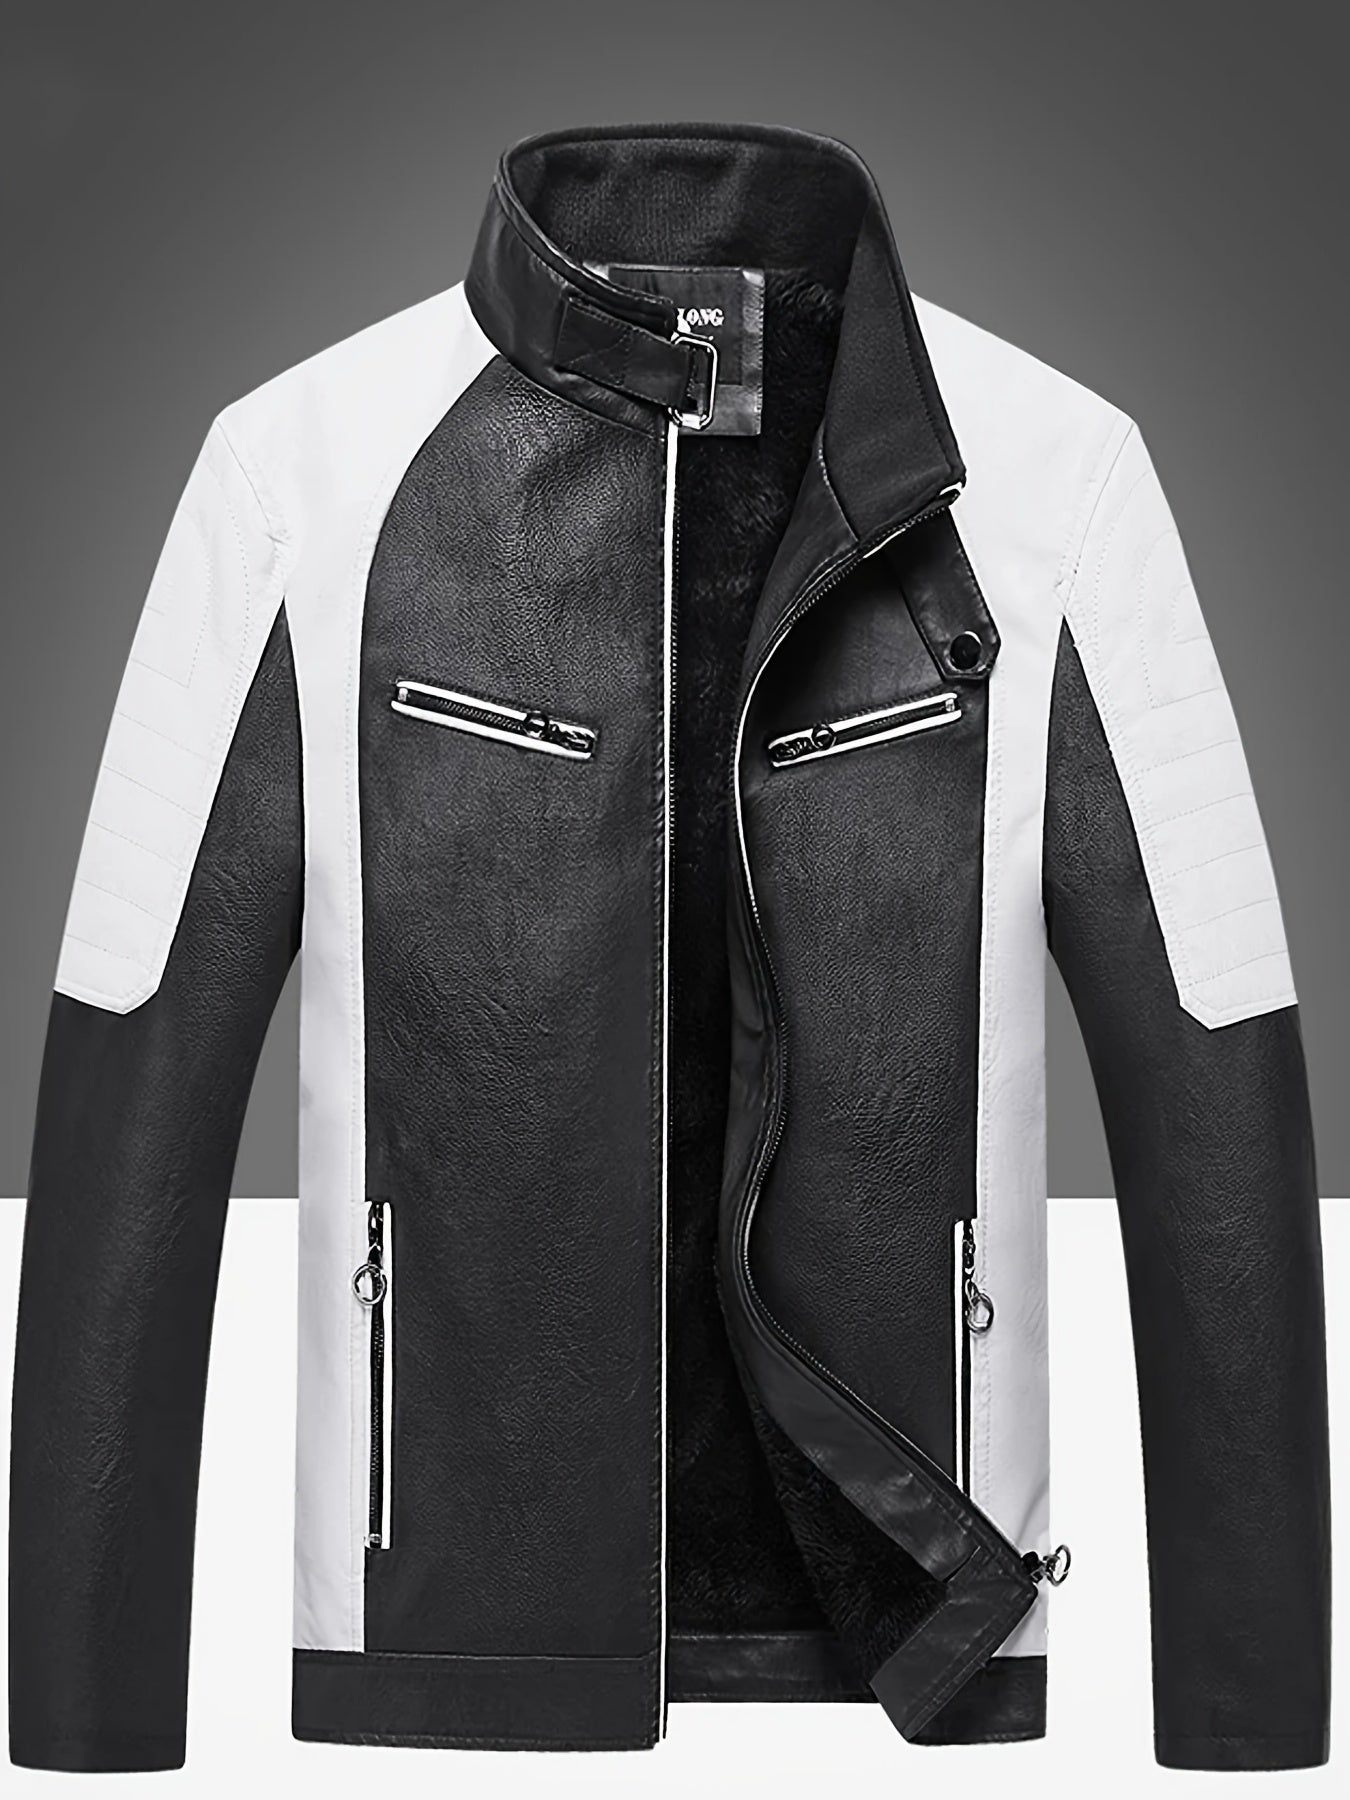 Men's Winter Fleece Warm PU Leather Jacket, Casual Patchwork Slim Bomber Jacket, Motorcycle Jacket Rongoworks